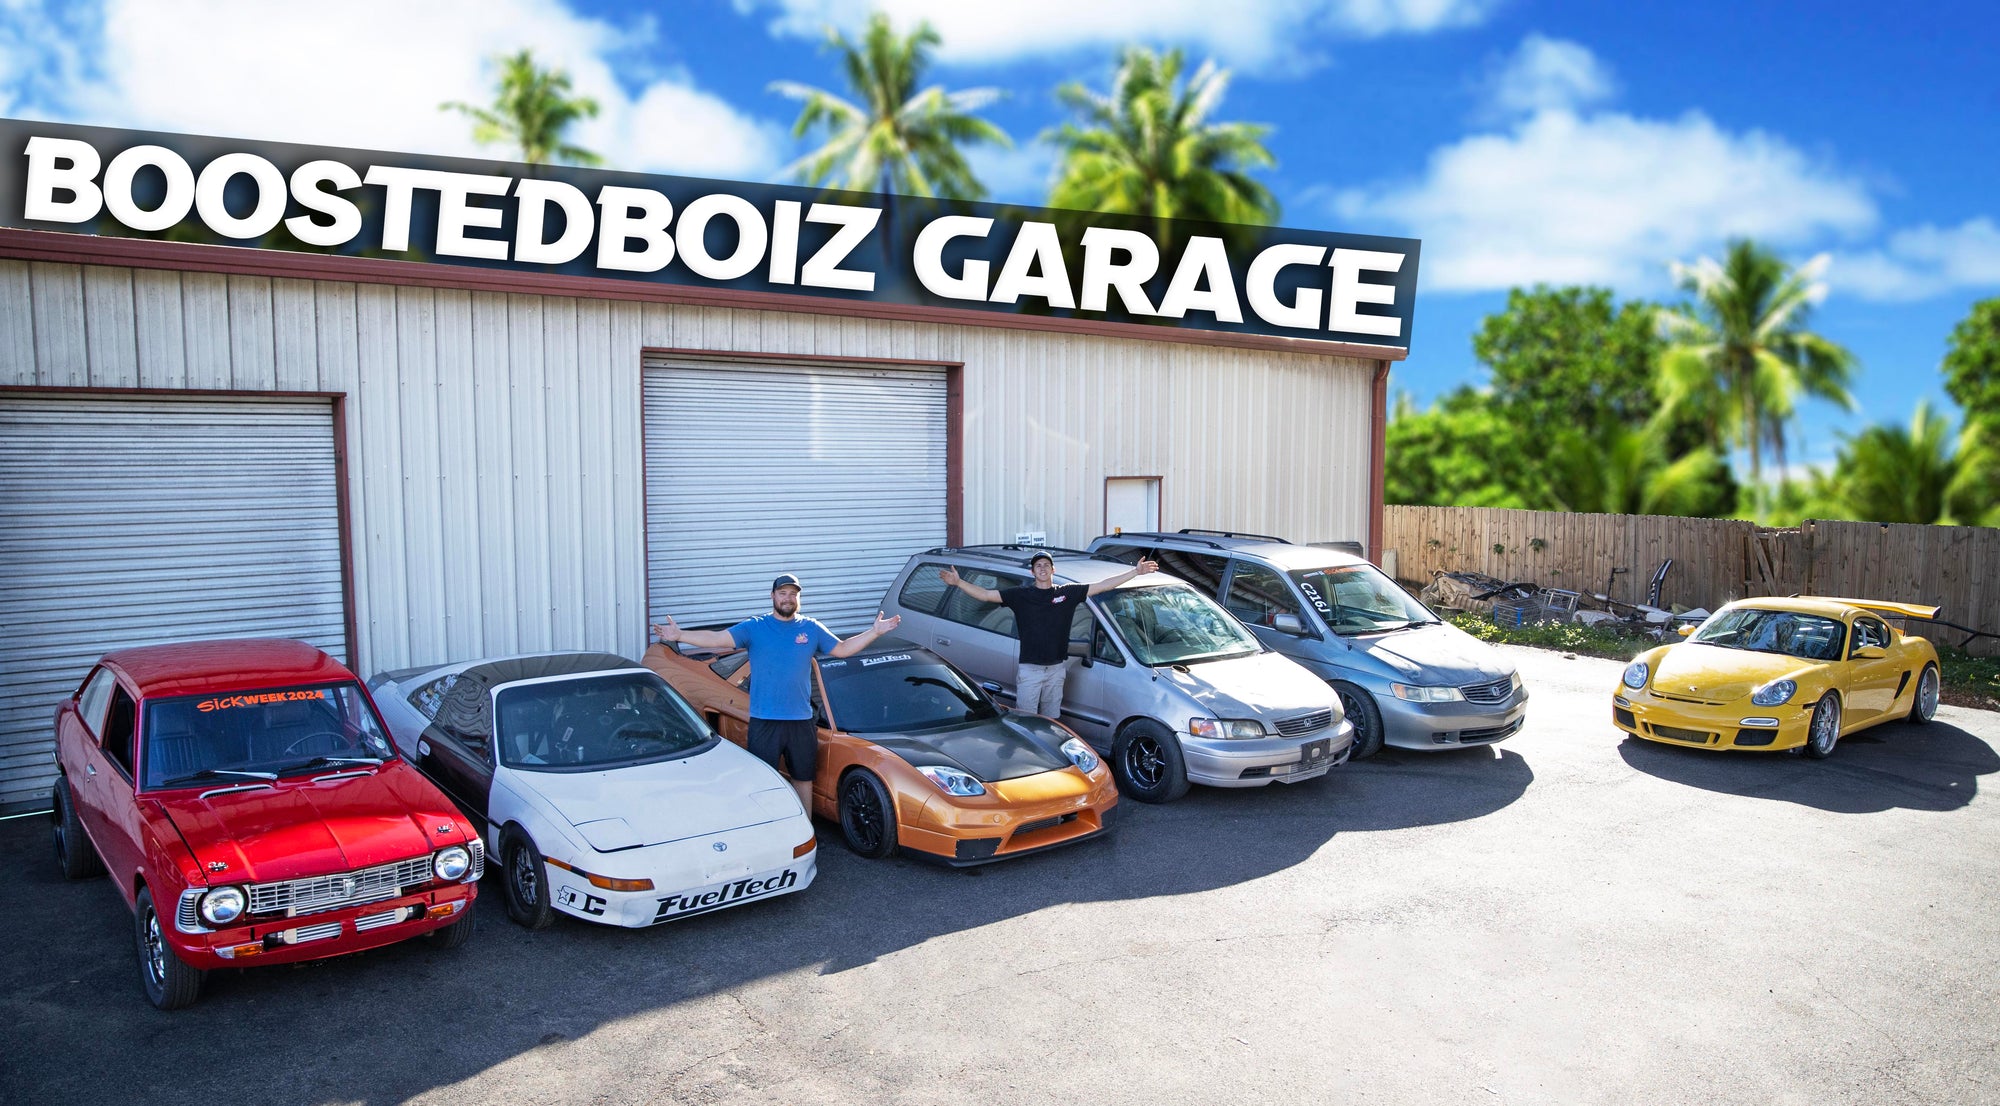 BoostedBoiz INFAMOUS Car Collection + Garage Tour (Record Holding Hondas)